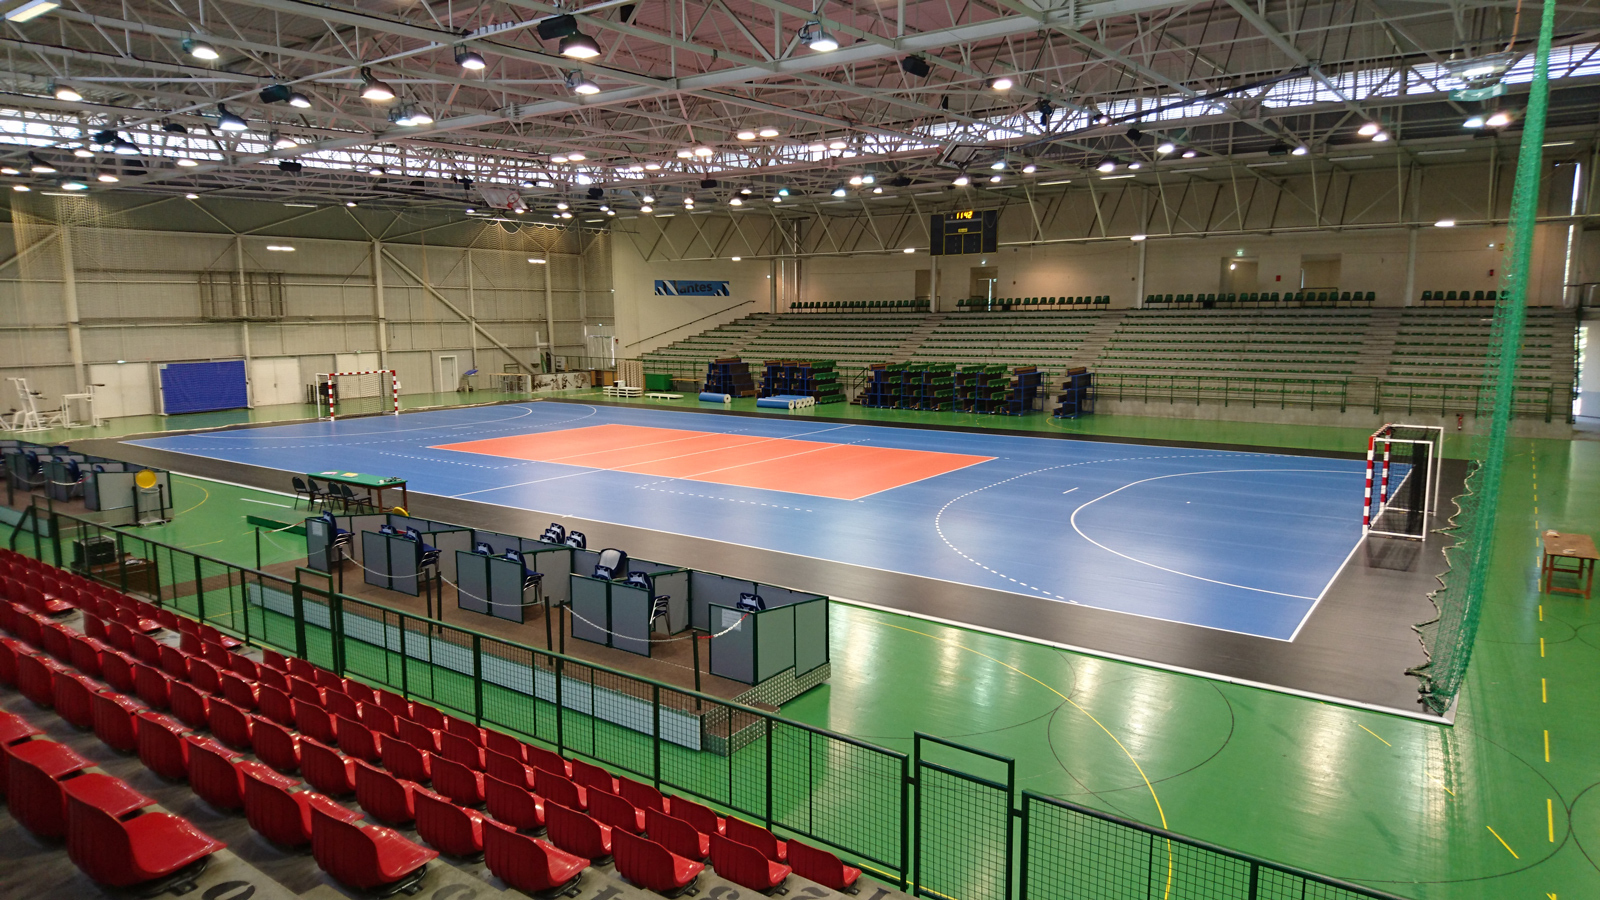 Sol PVC pour salle omnisports - Sportings sols - Nantes mangin